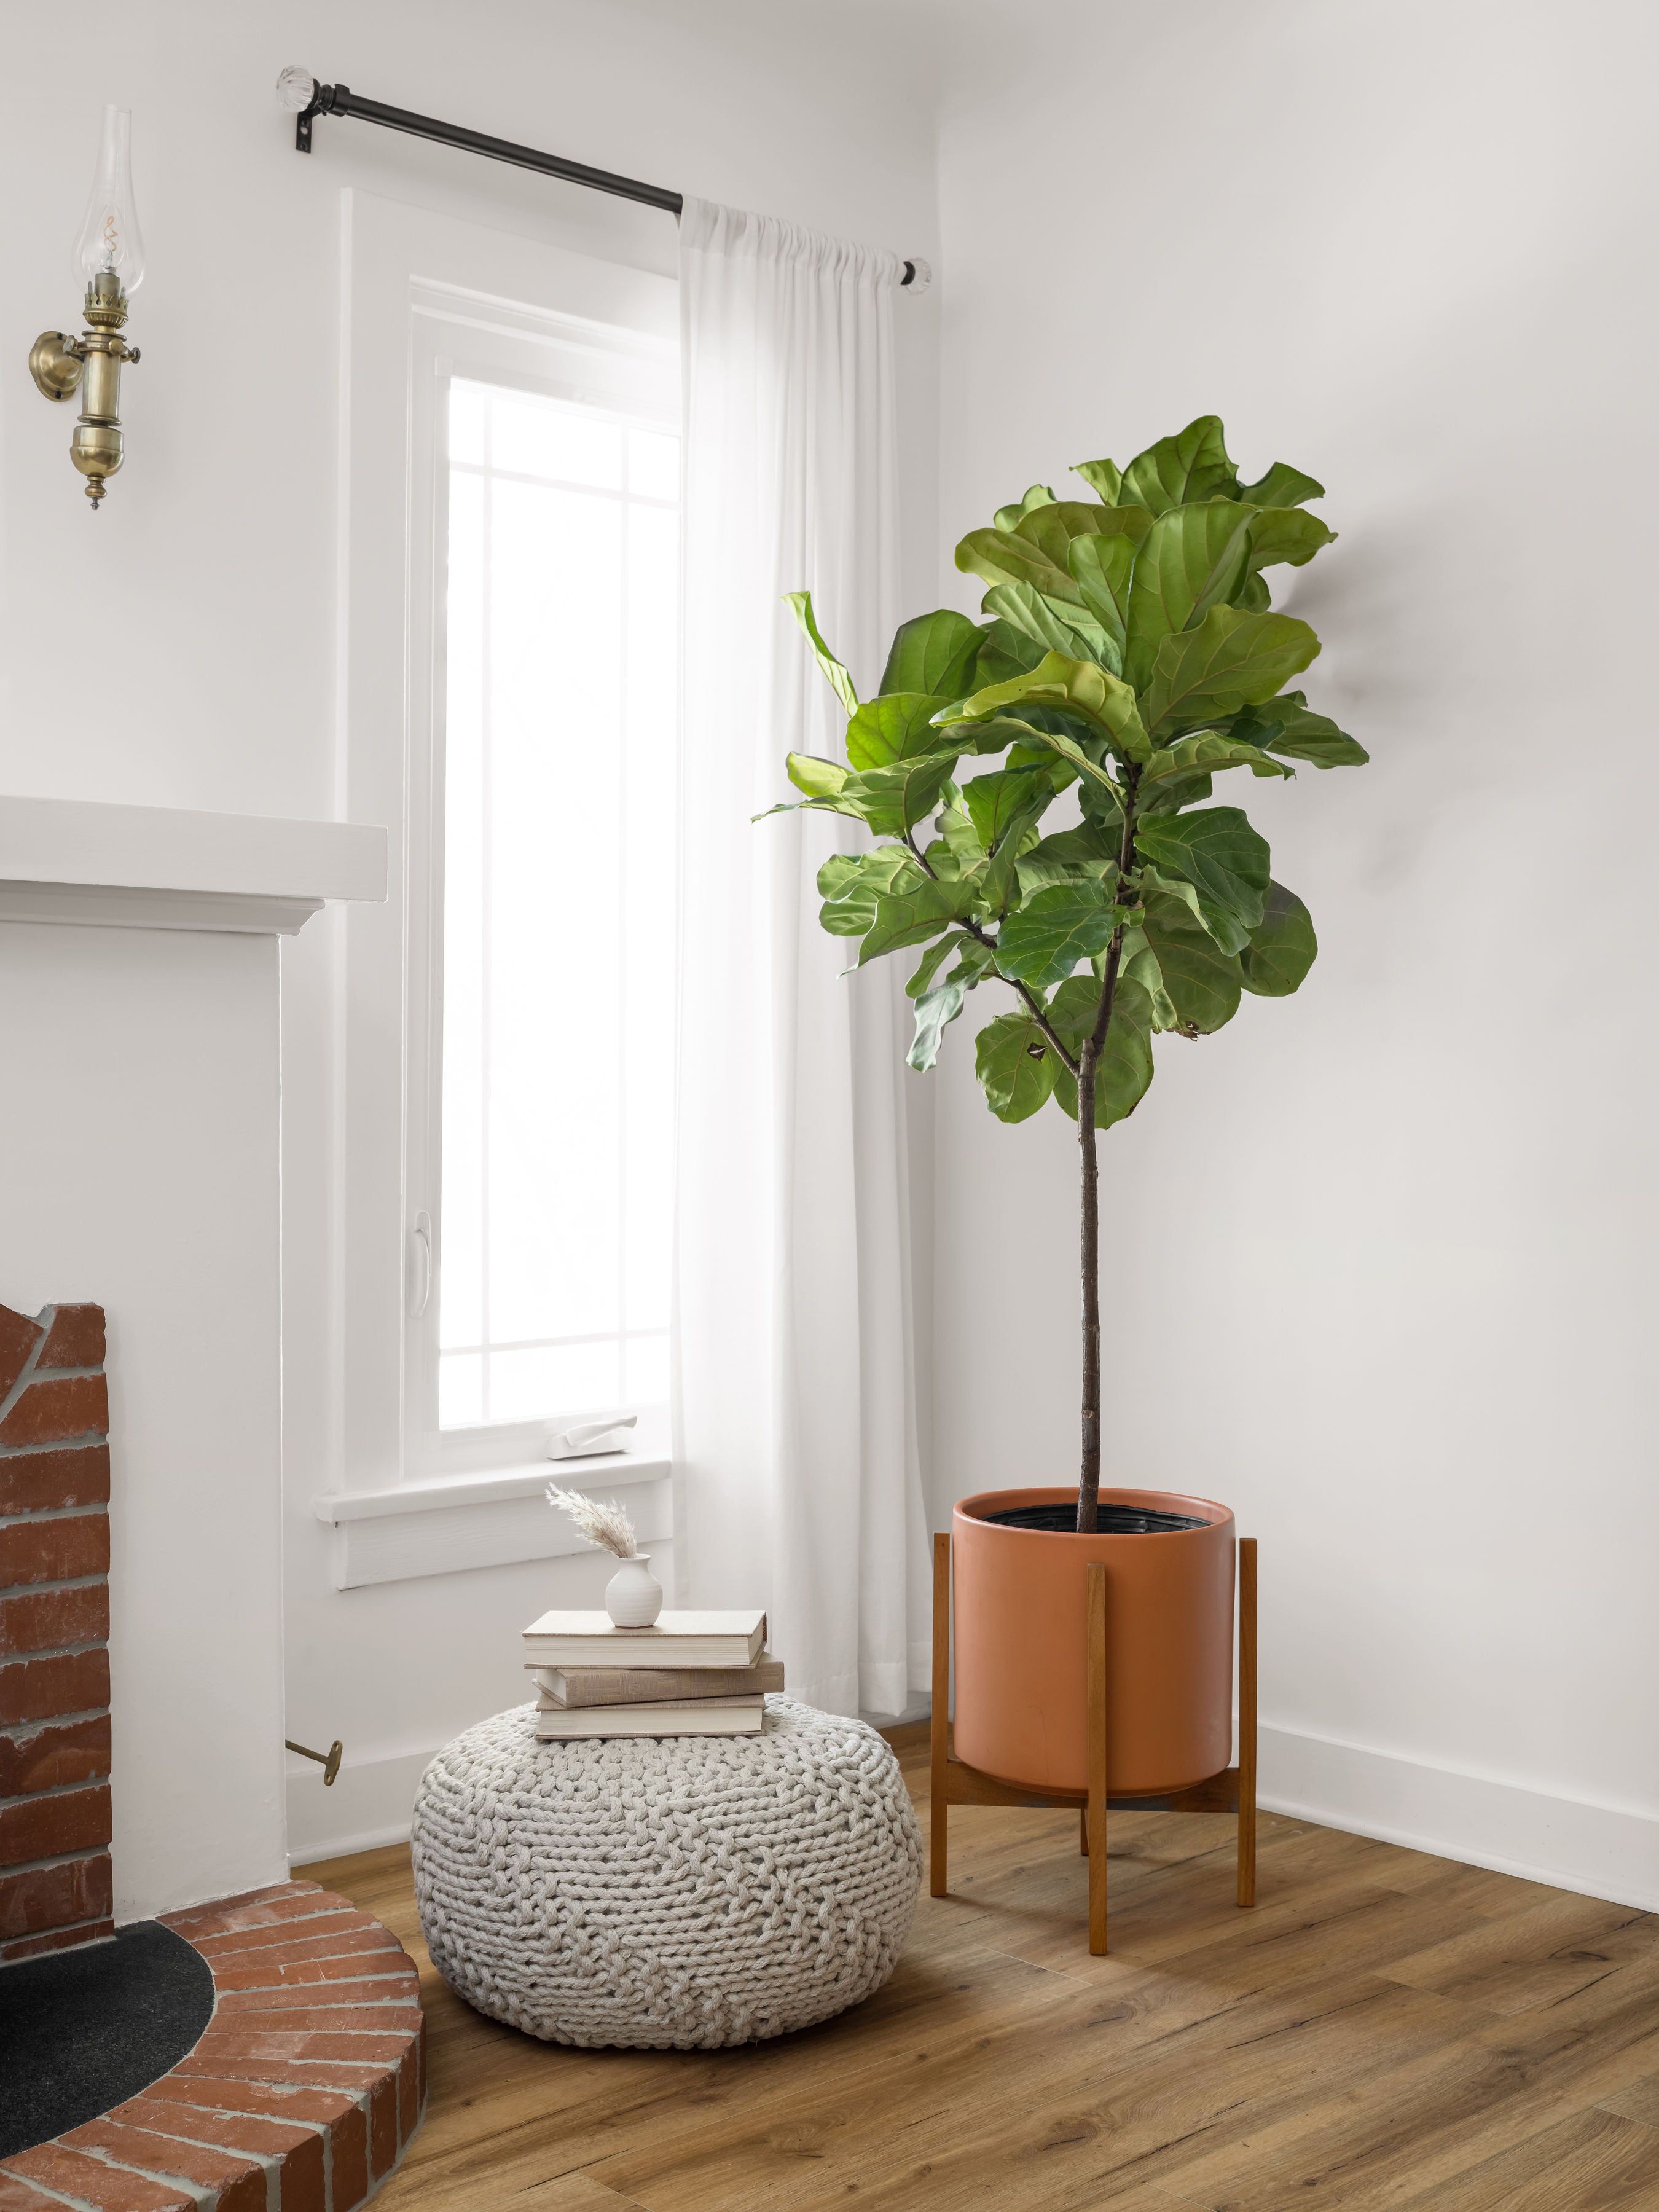 Image of 12" Ceramic Cylinder Planter with Fiddle Leaf Fig in Home Office